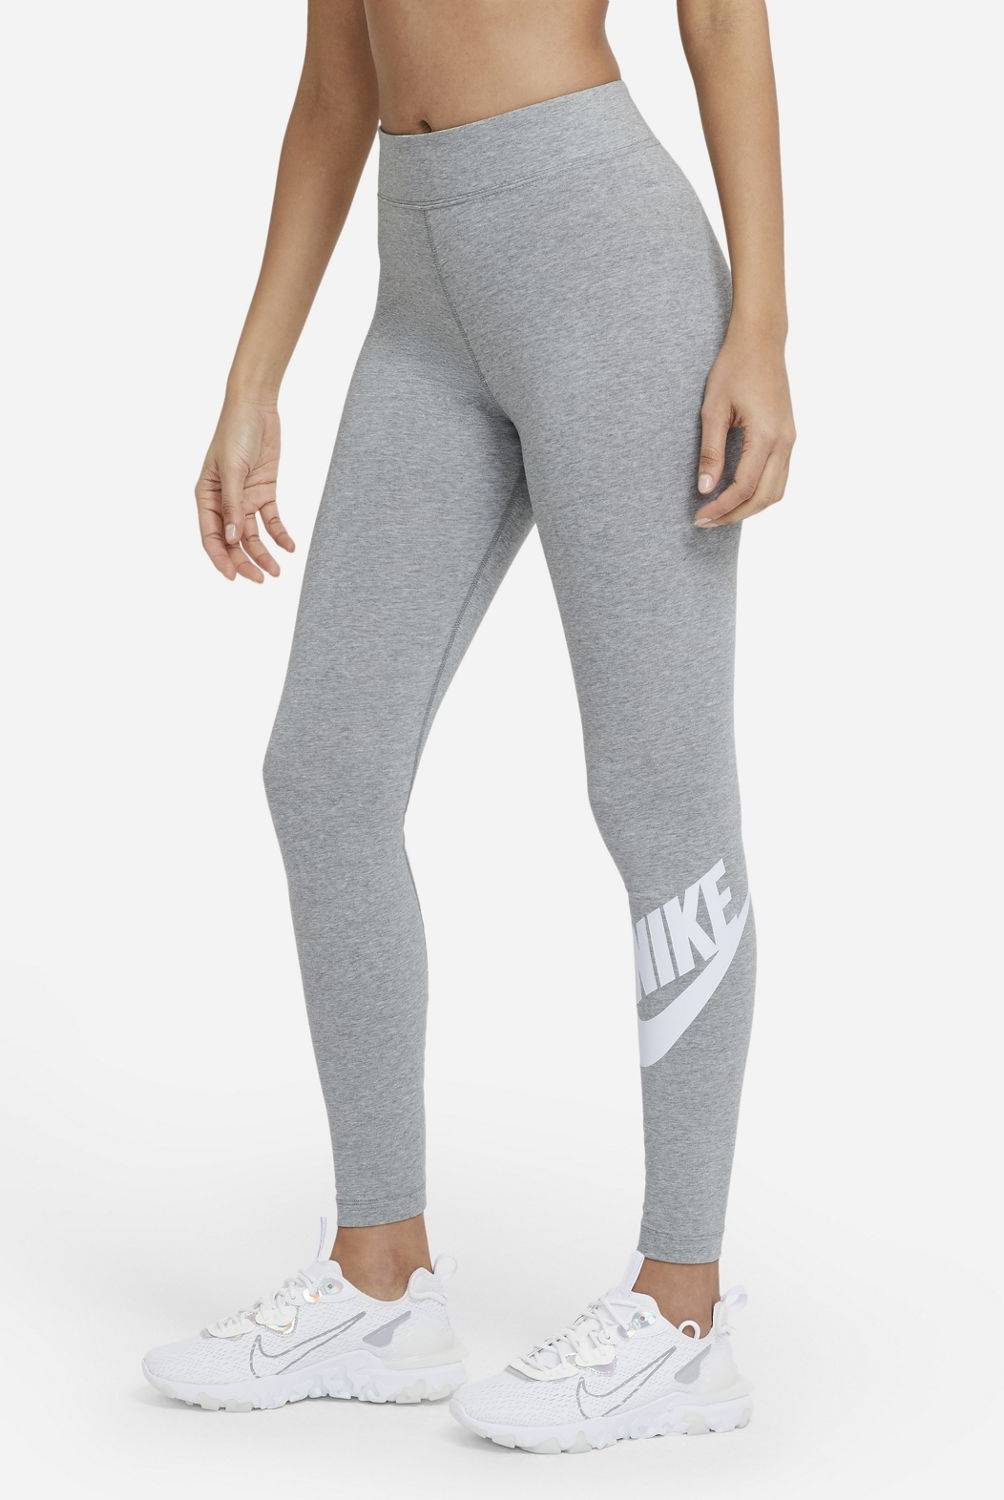 NIKE - Calza Nike Sportswear Essential Mujer